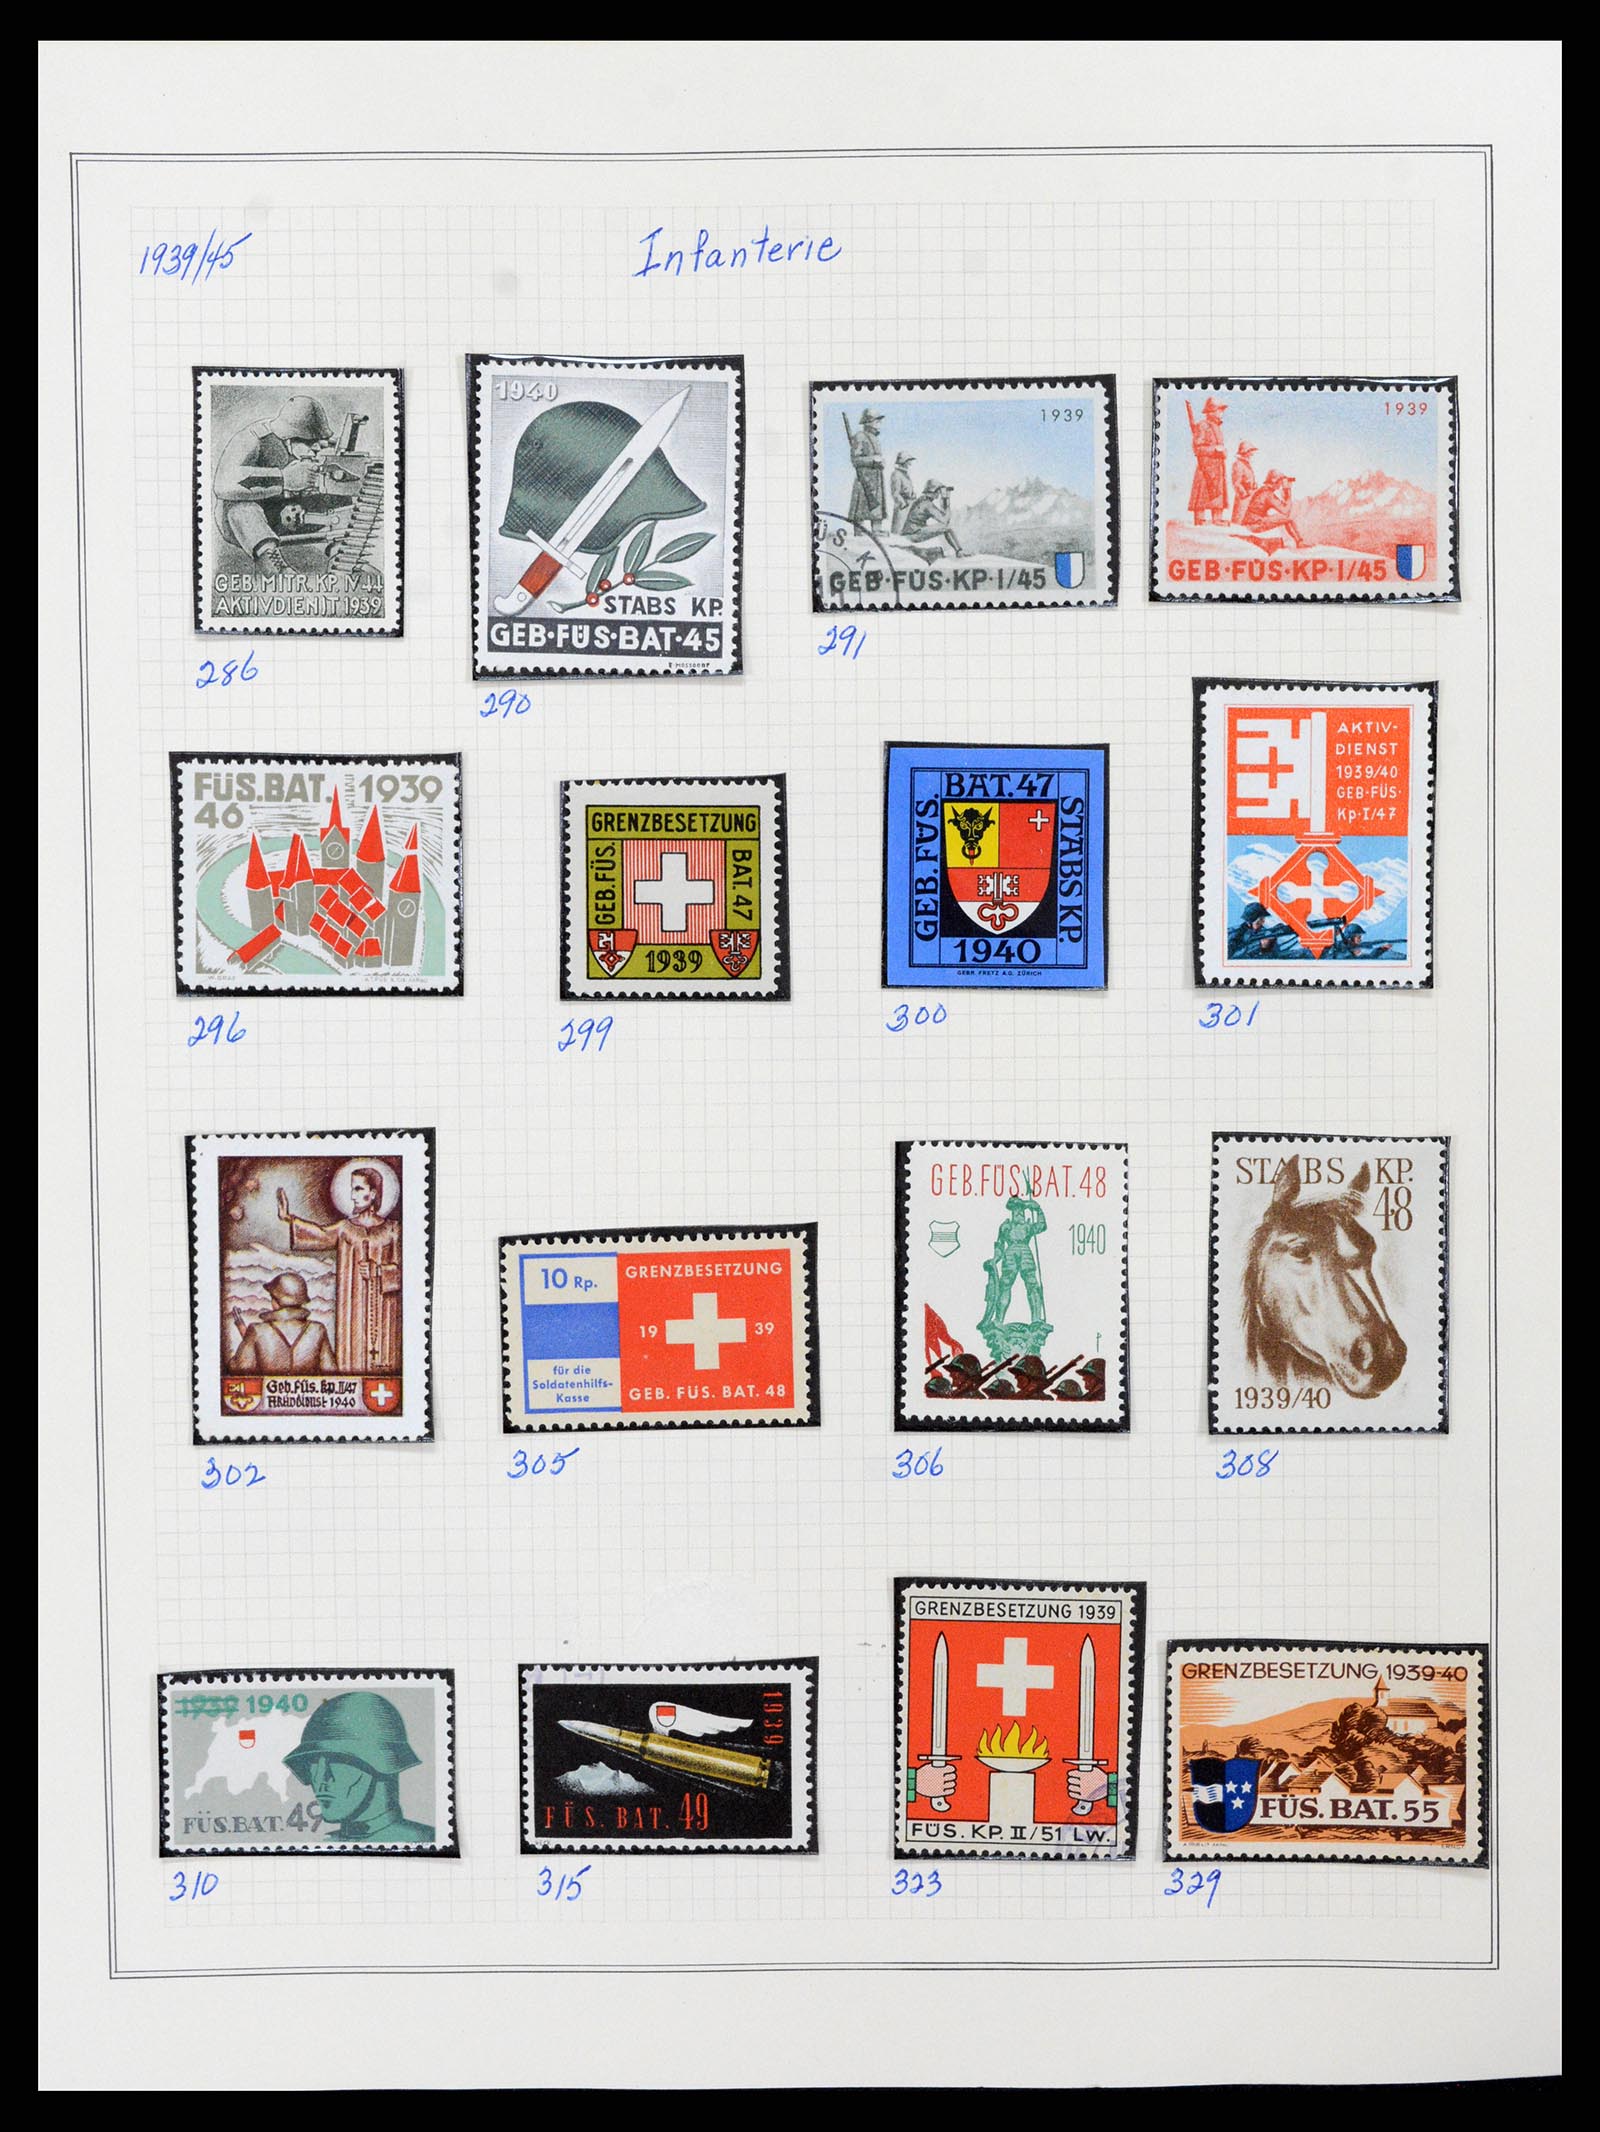 37642 038 - Stamp collection 37642 Switzerland soldier stamps 1914-1945.